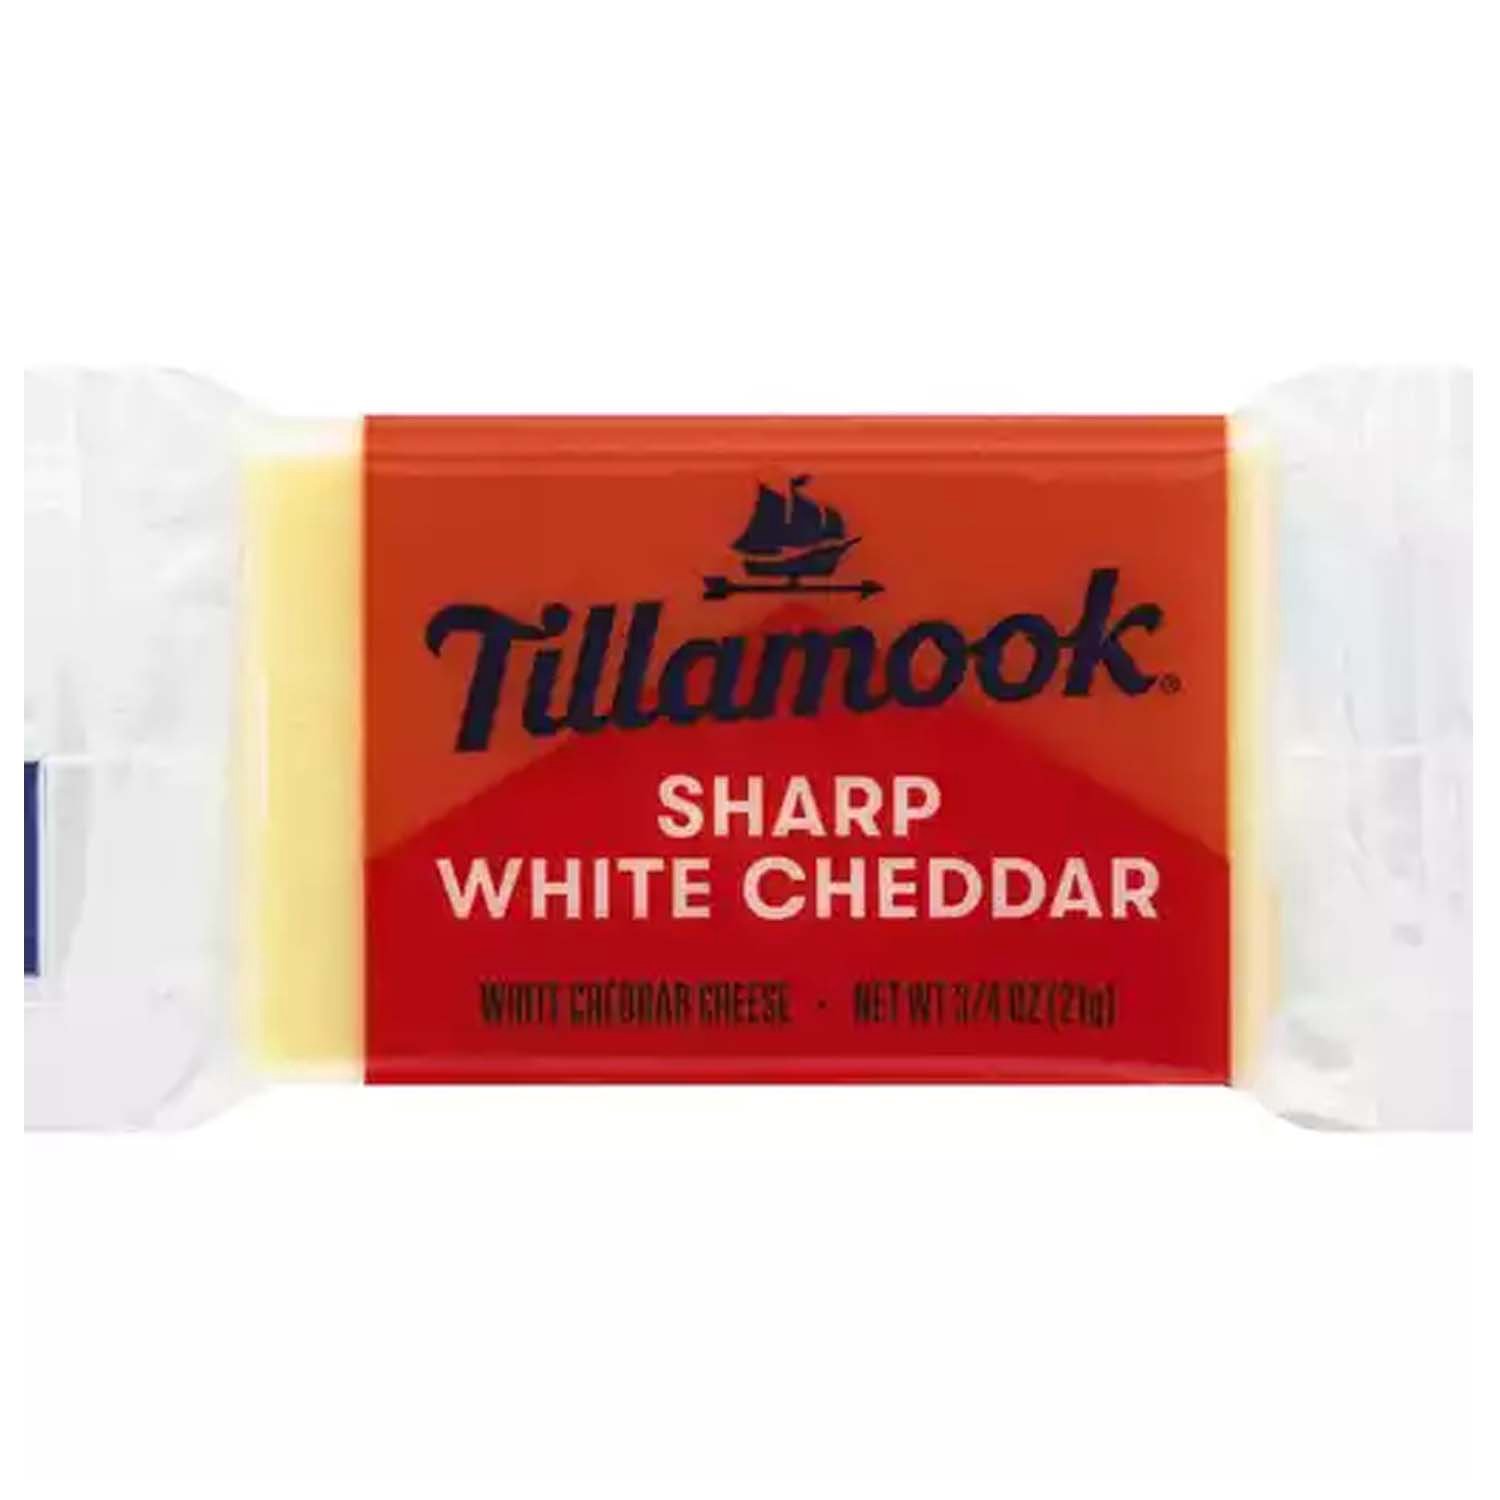 Extra Sharp White Cheddar Fine Cut Shredded Cheese - Tillamook